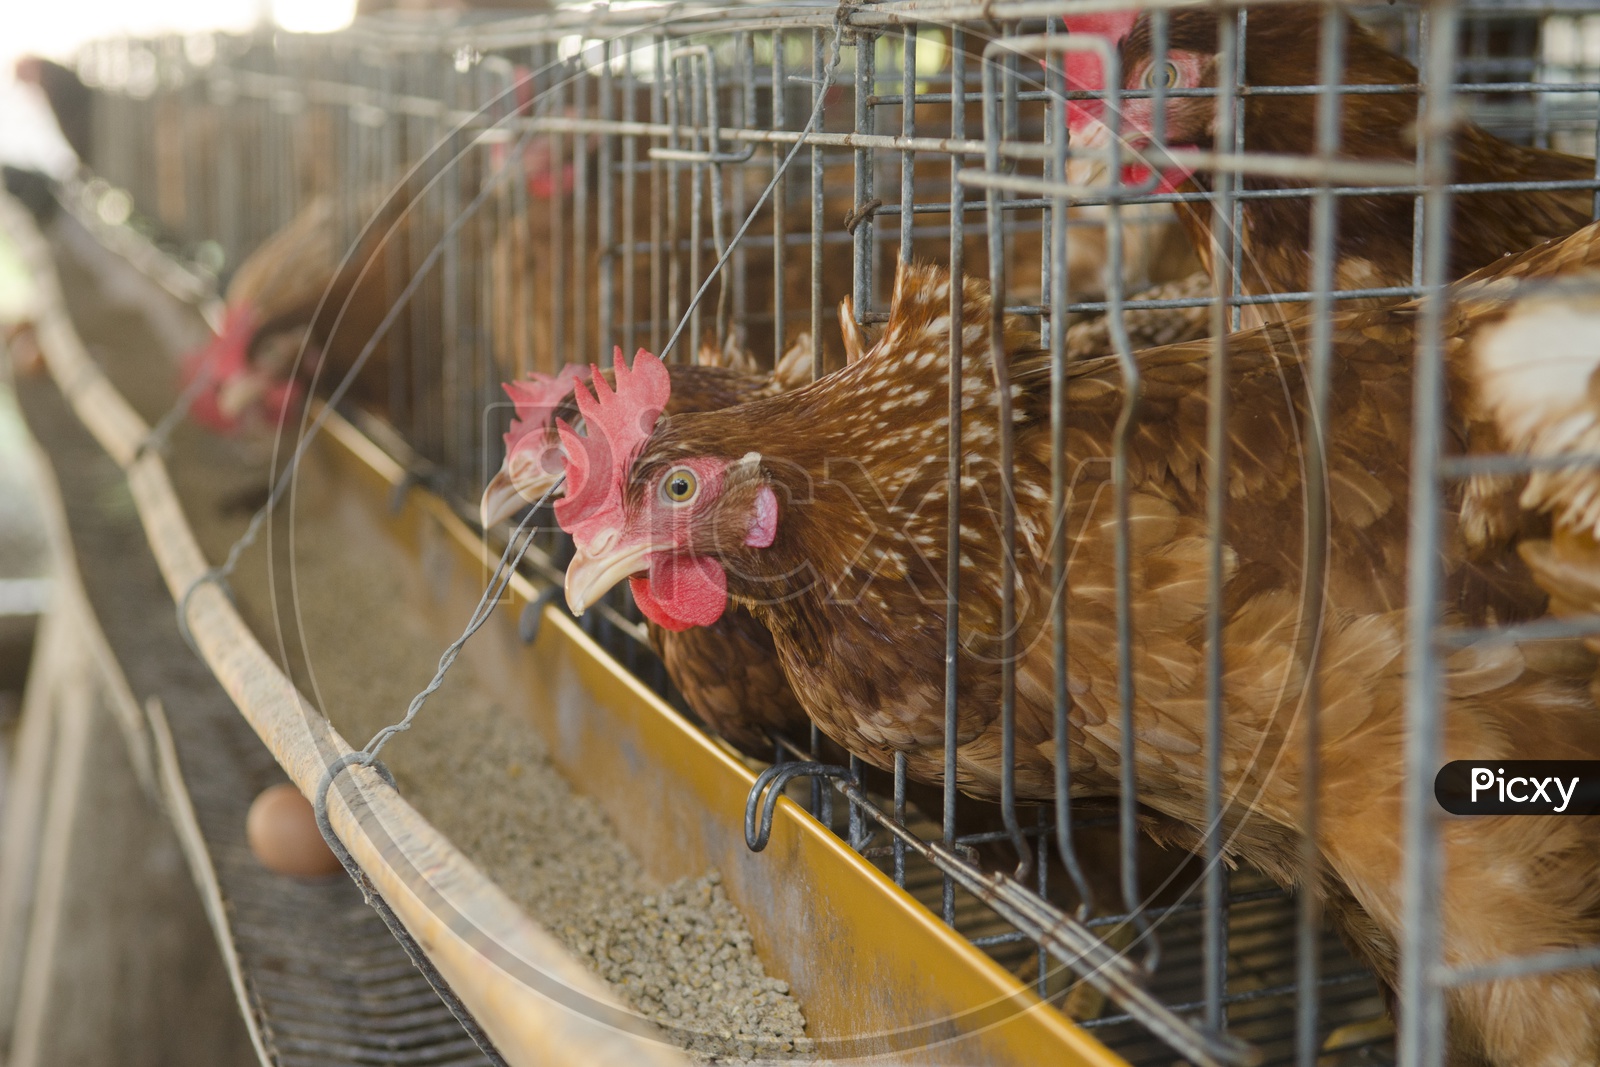 Chickens in a Farm, Thailand